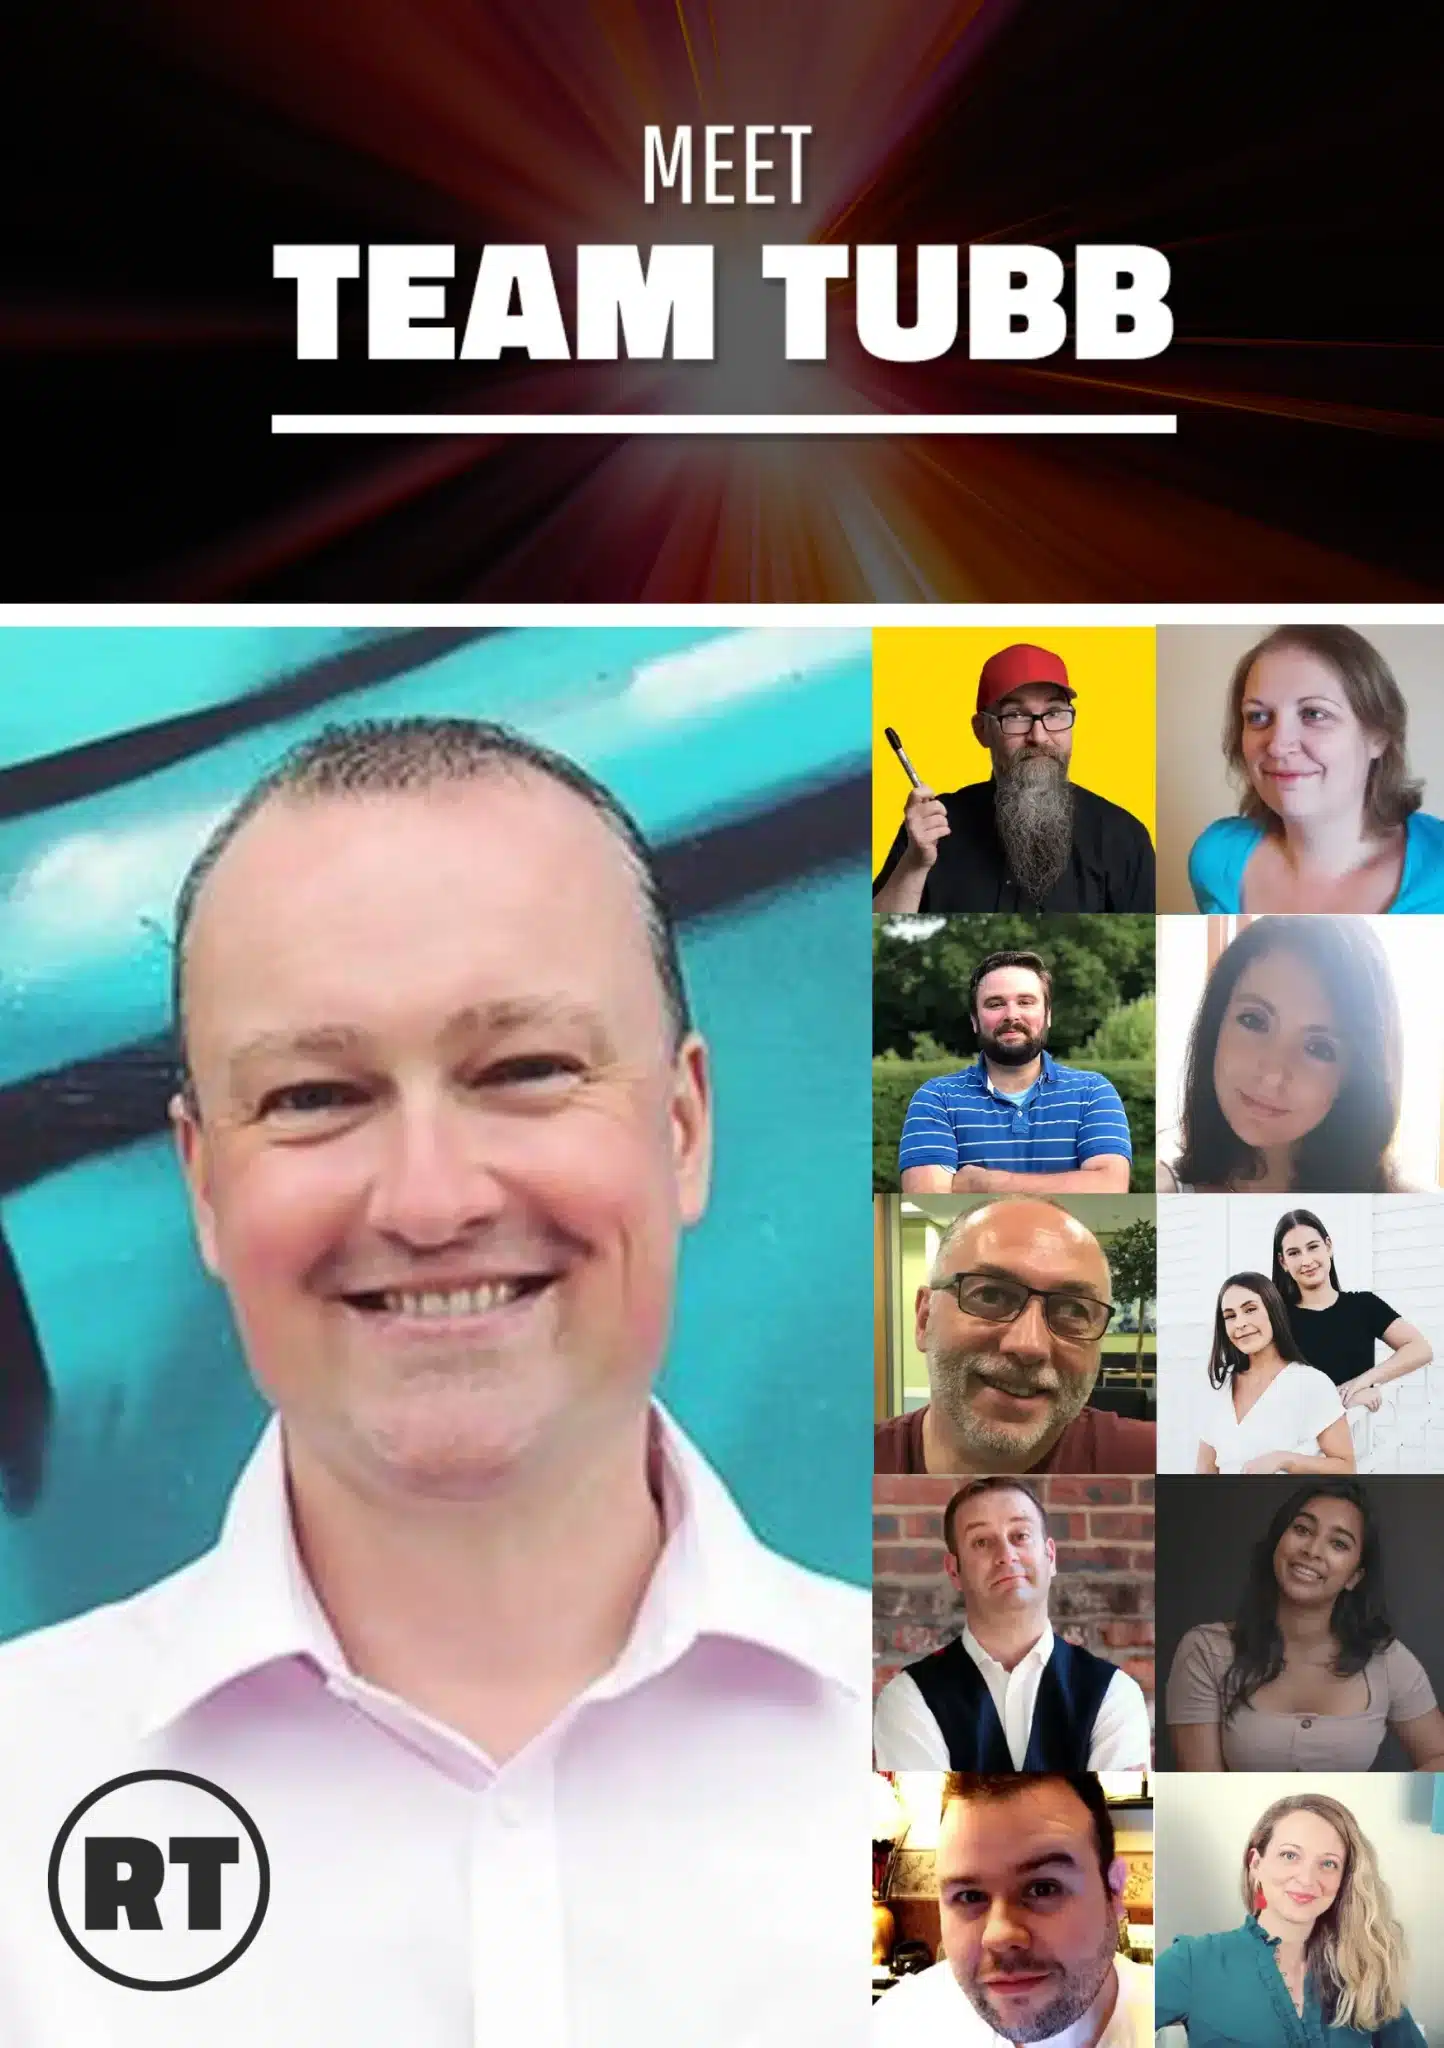 Inside Team Tubb image